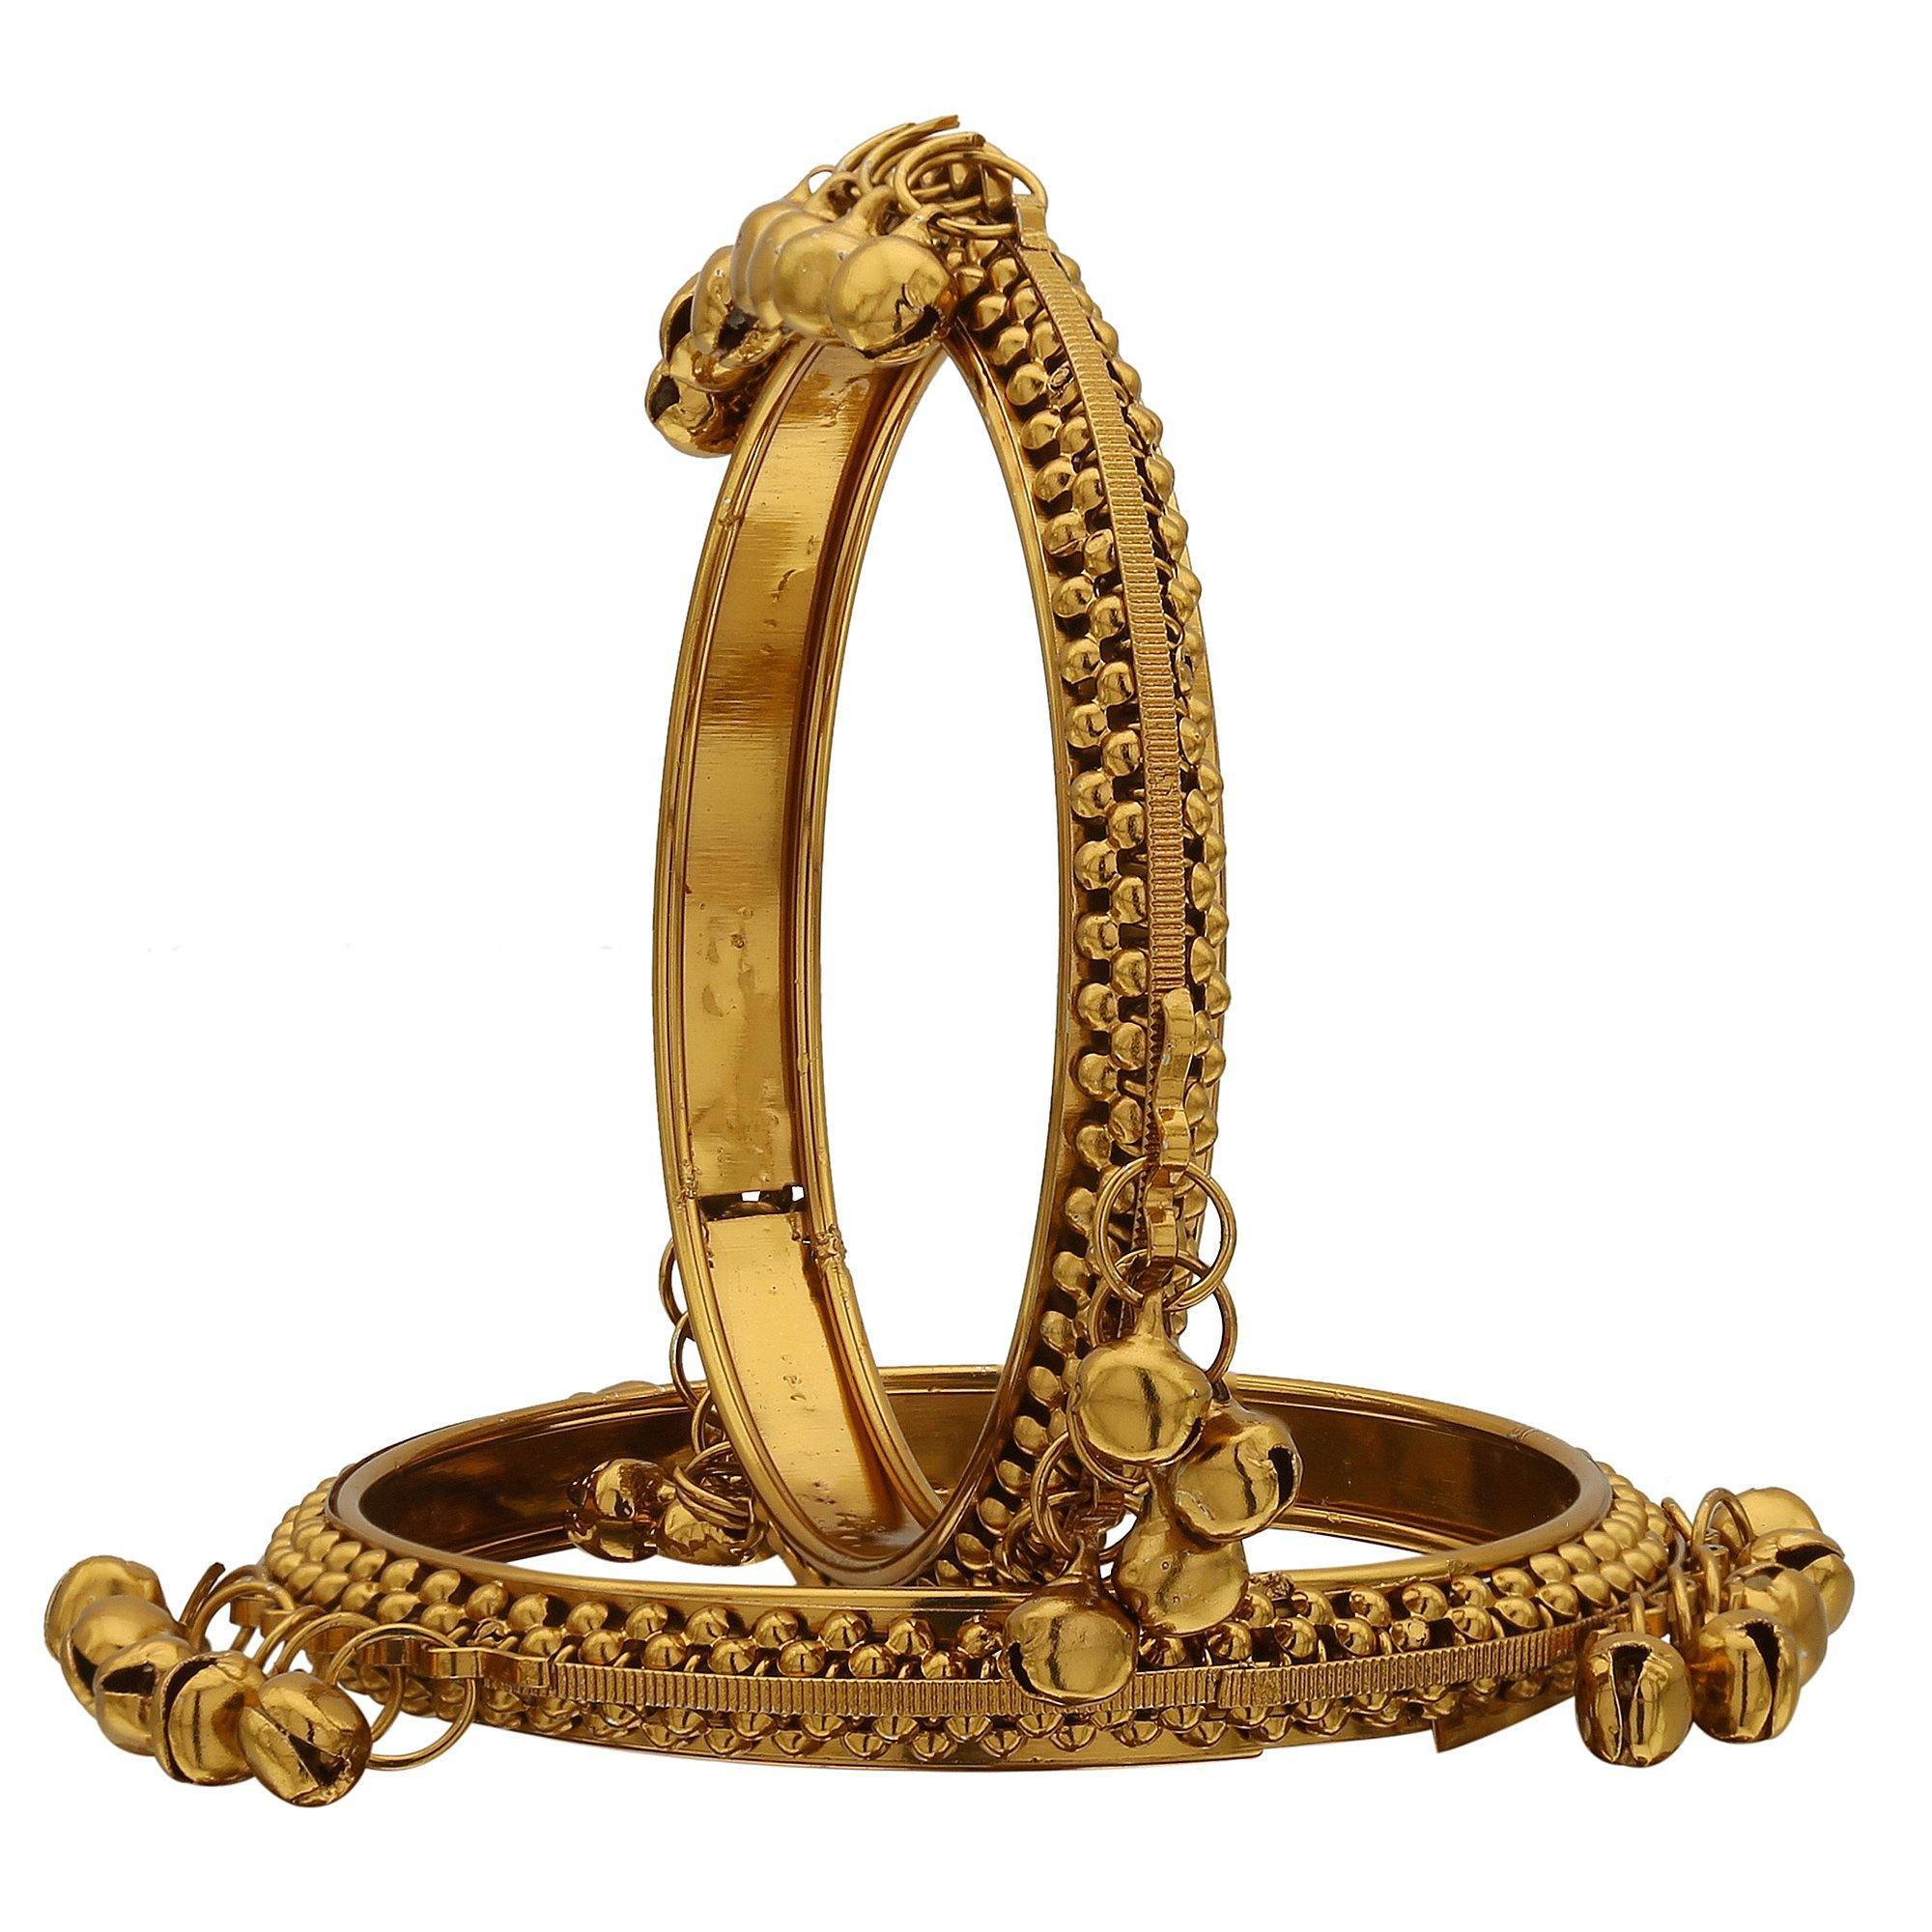 Exquisite Antique Kundan Bracelet in High Gold Brass Finish